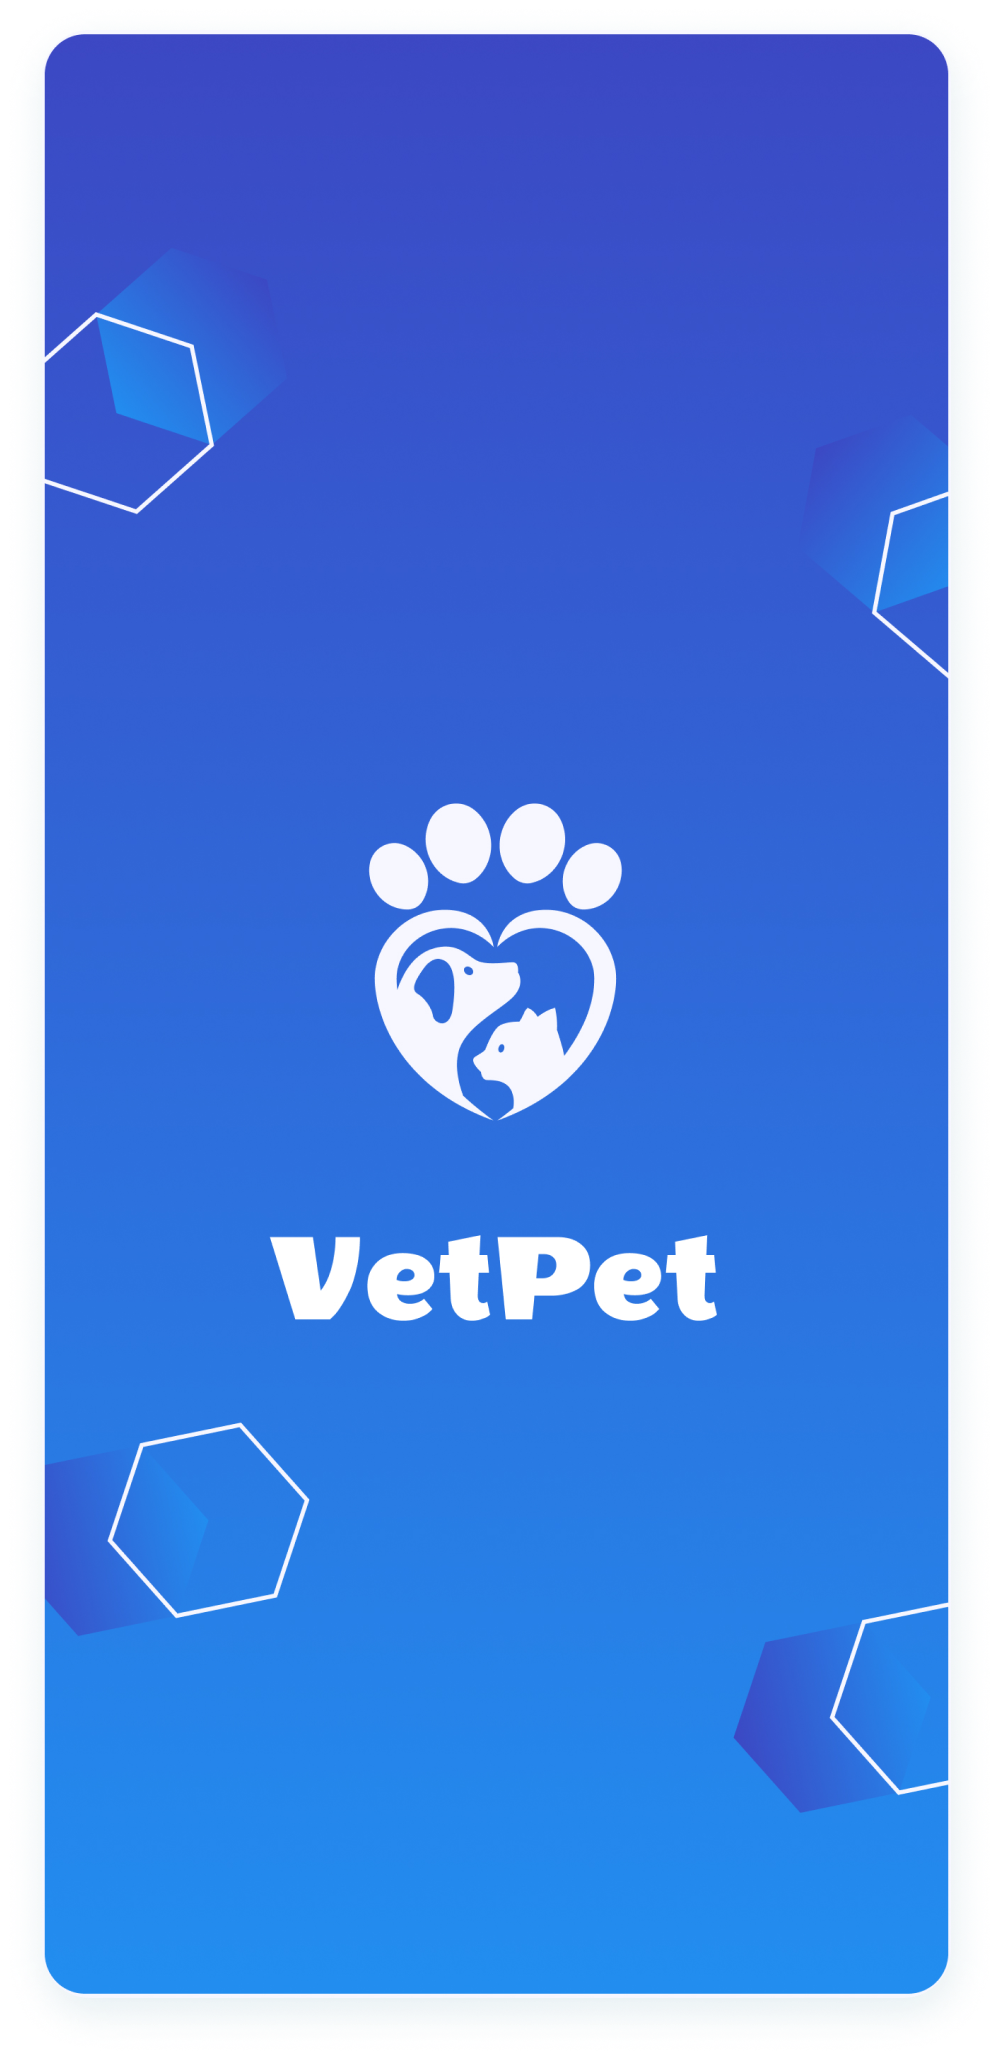  UI design of the main screen of the VetPet app 